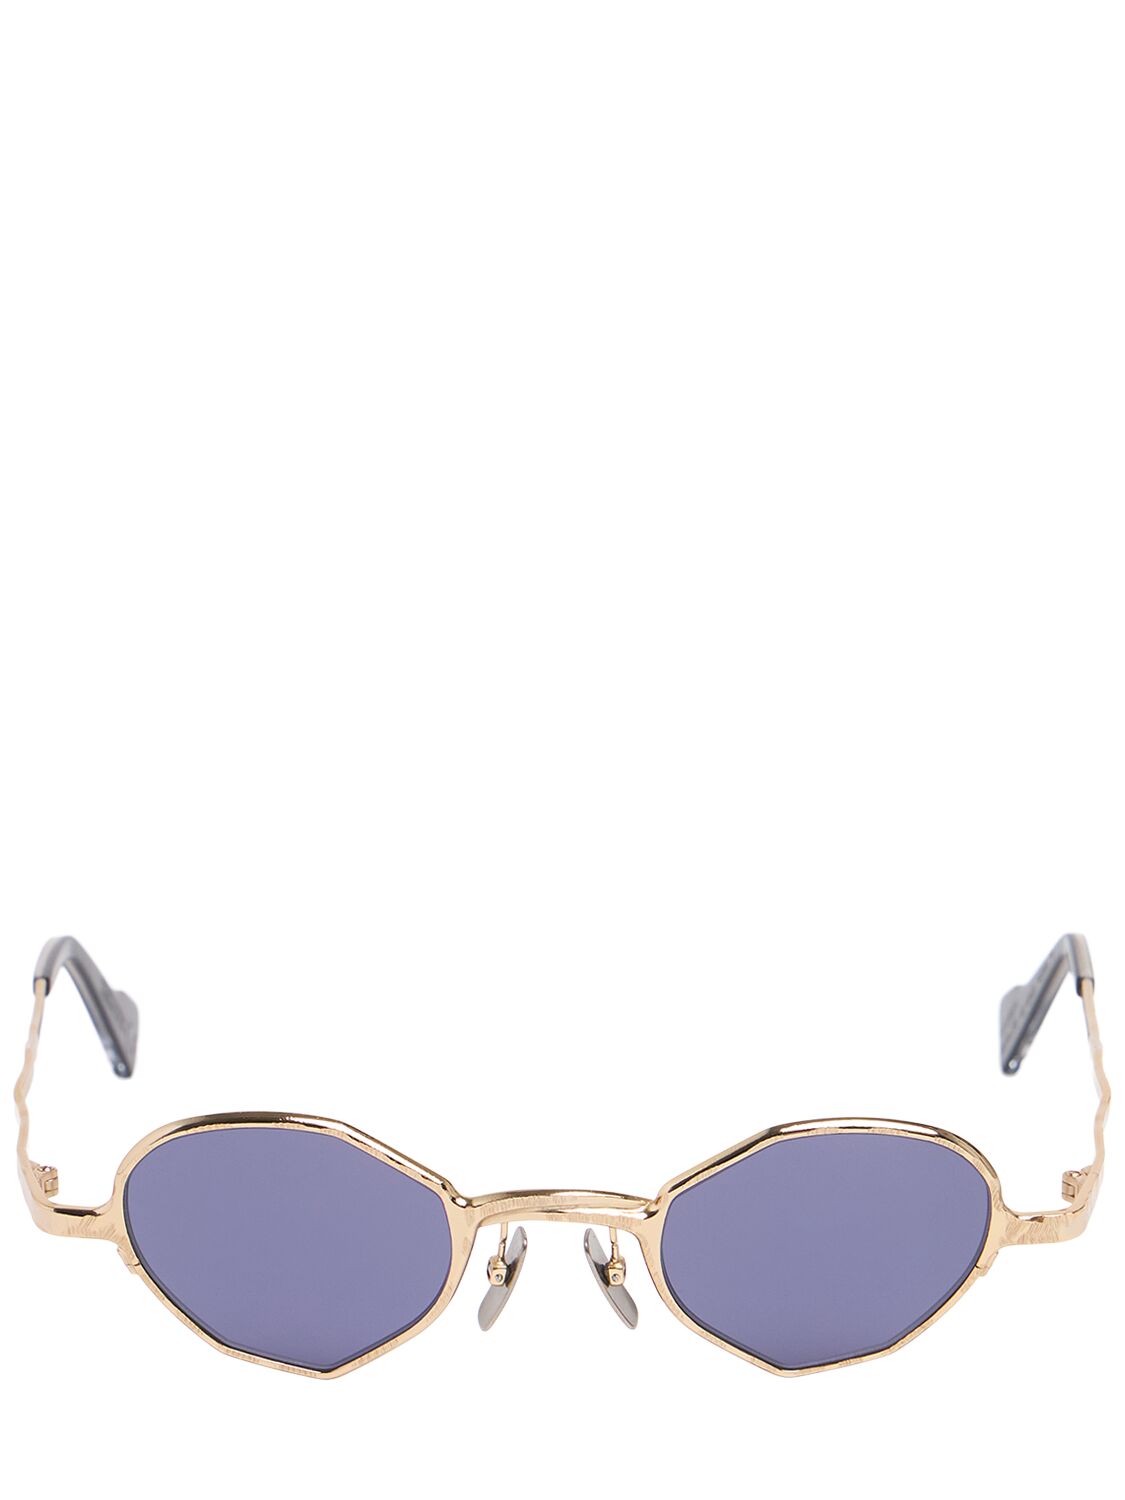 Kuboraum Berlin Z20 Round Metal Sunglasses In Gold,purple